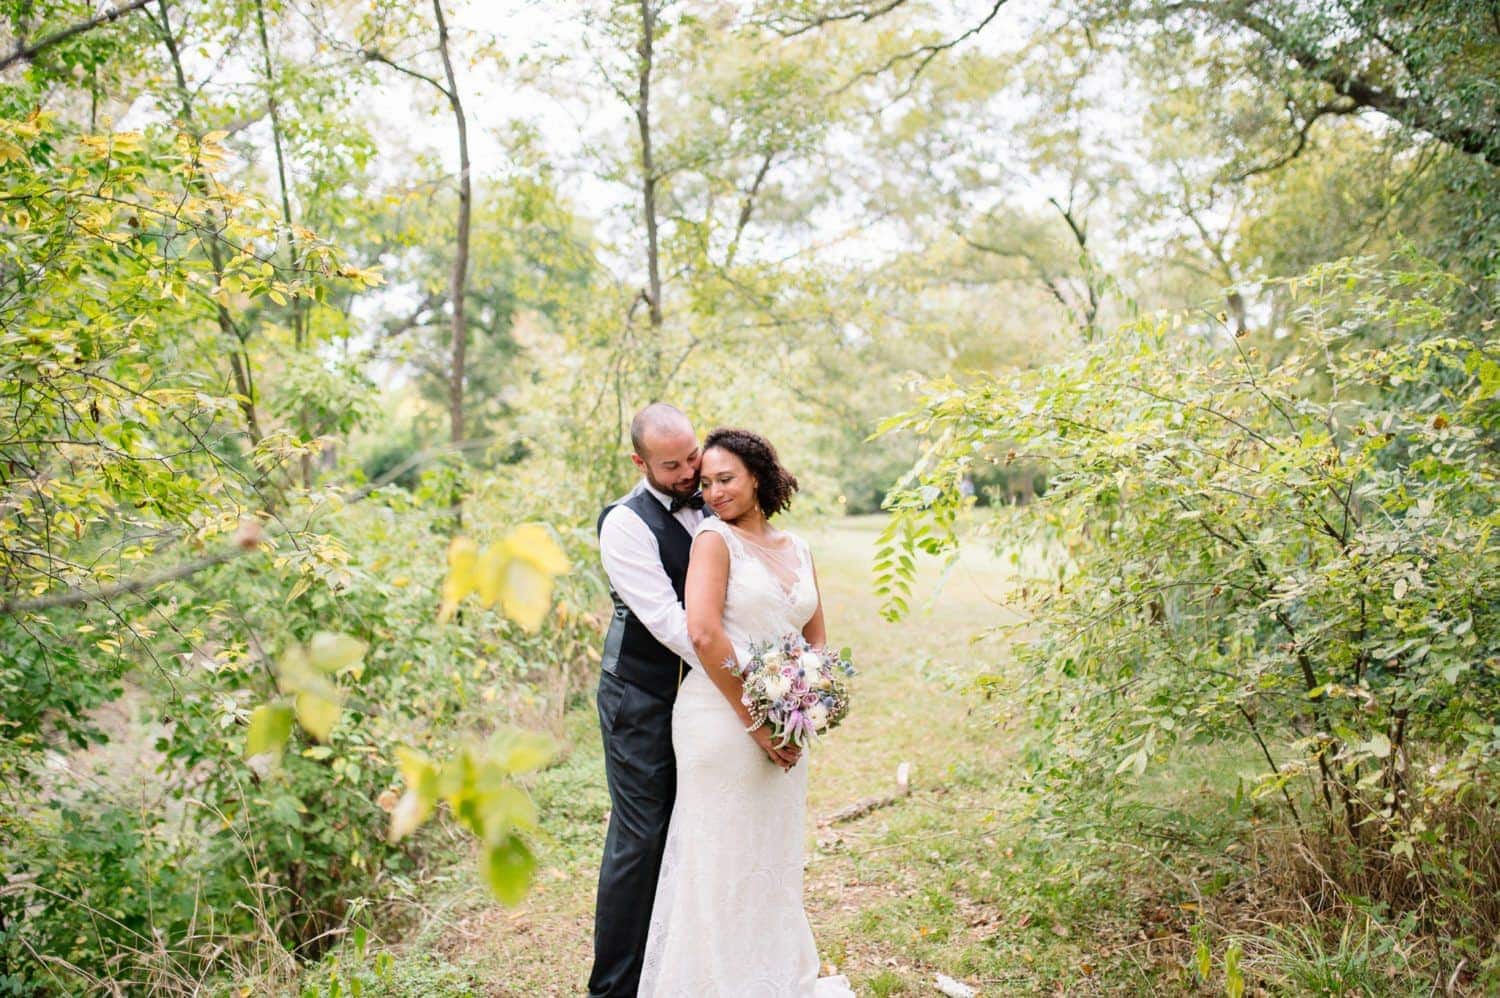 Backyard wedding photography at Arlington Texas by destination wedding photographer Camille Fontanez